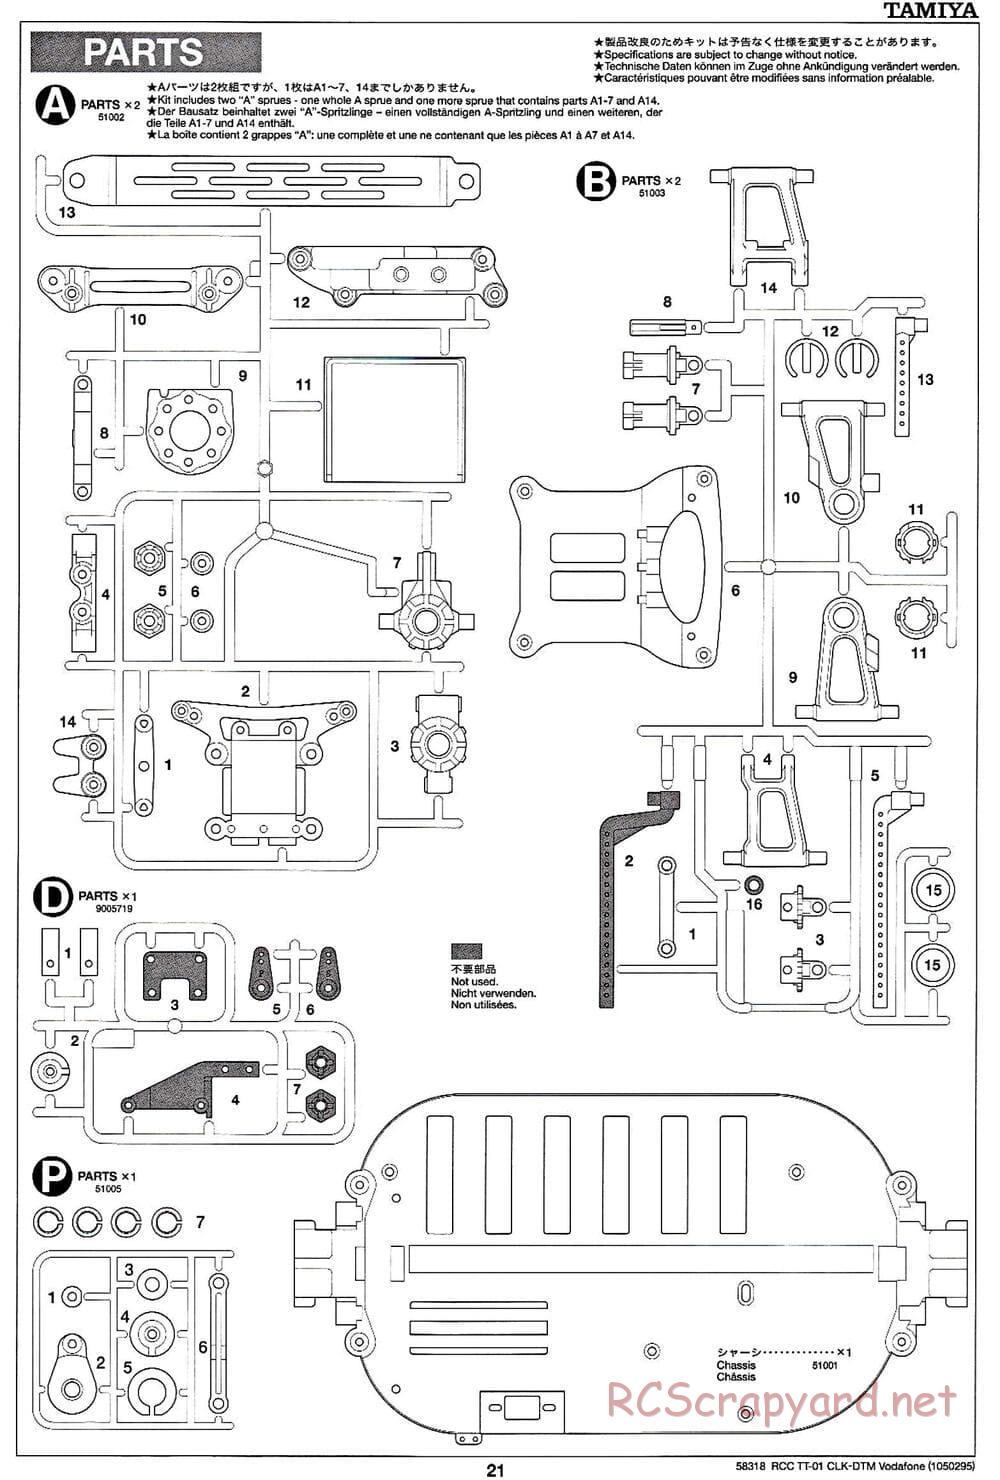 Tamiya - Mercedes-Benz CLK-DTM Team Vodafone AMG-Mercedes - TT-01 Chassis - Manual - Page 21